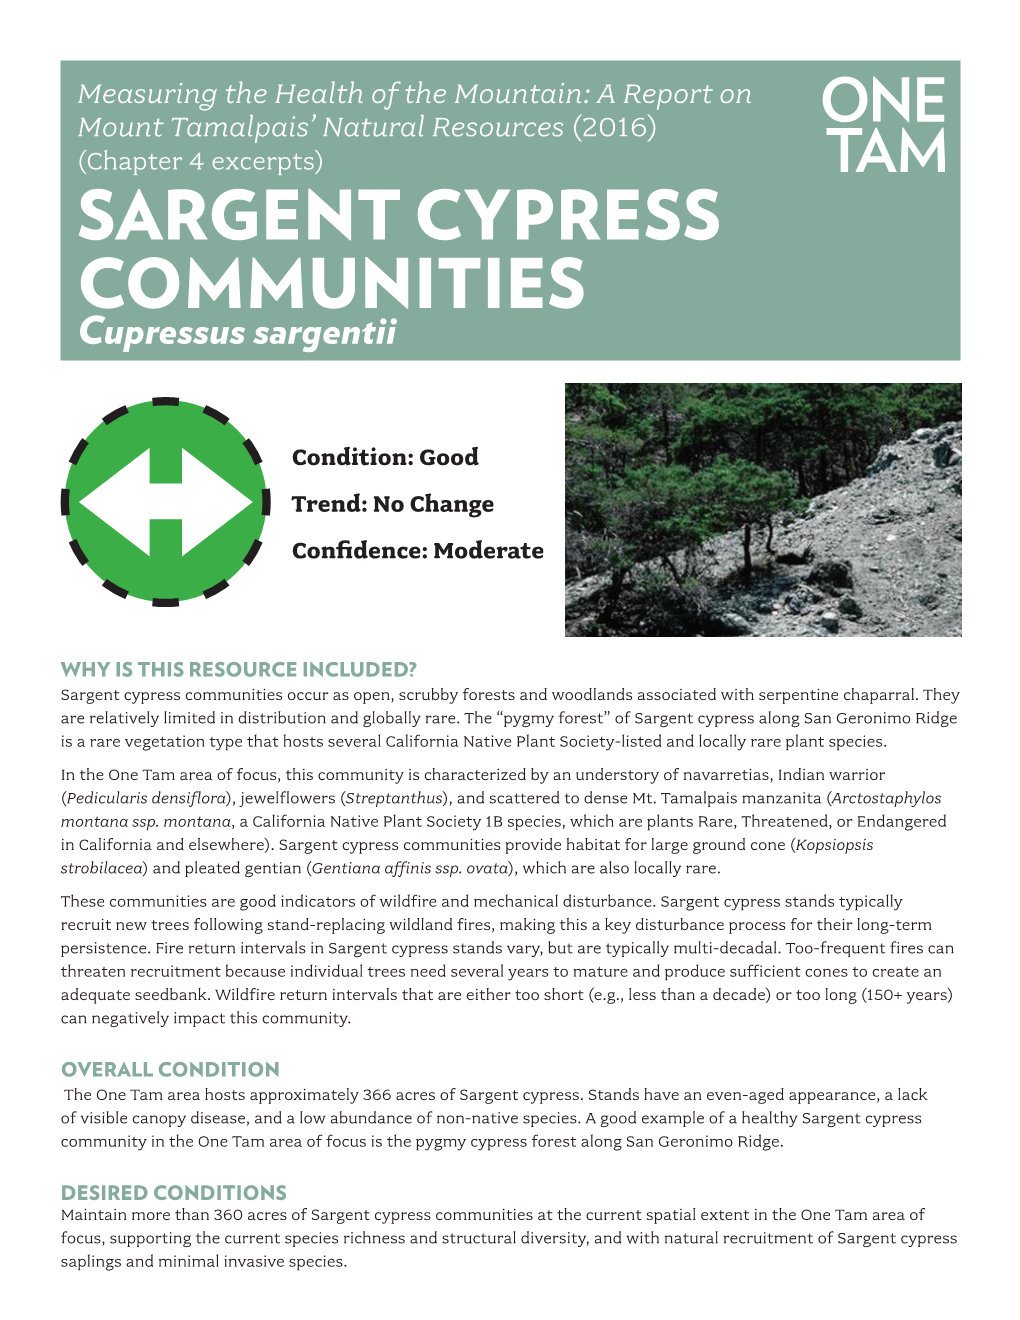 SARGENT CYPRESS COMMUNITIES Cupressus Sargentii